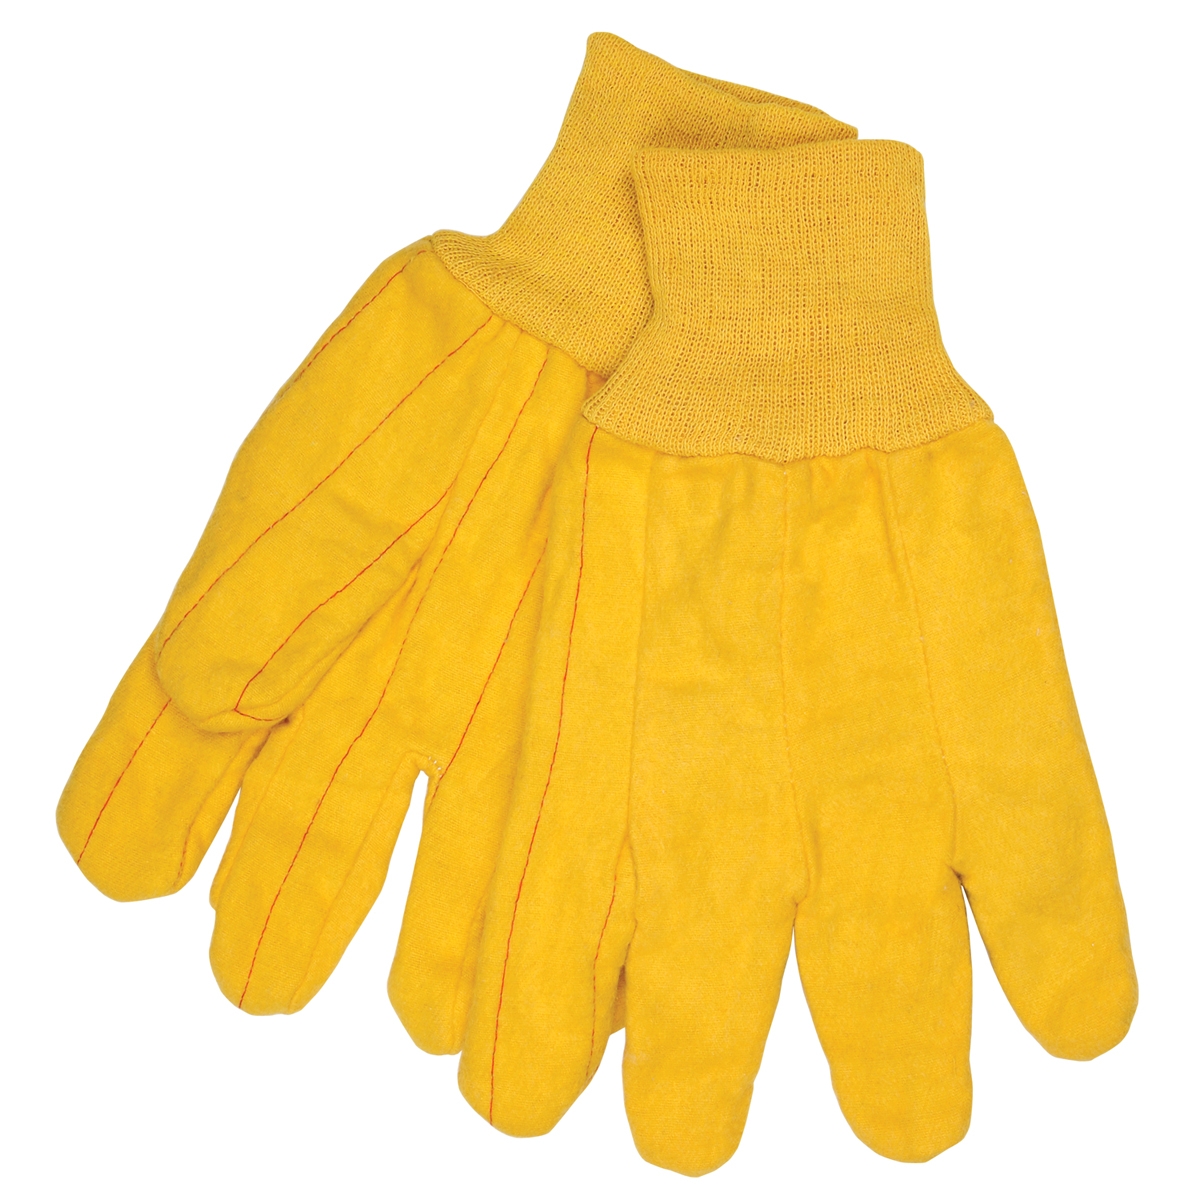 Memphis 8526 Canvas Chore Gloves - Fleece Palm - Knit Wrist - Yellow ...